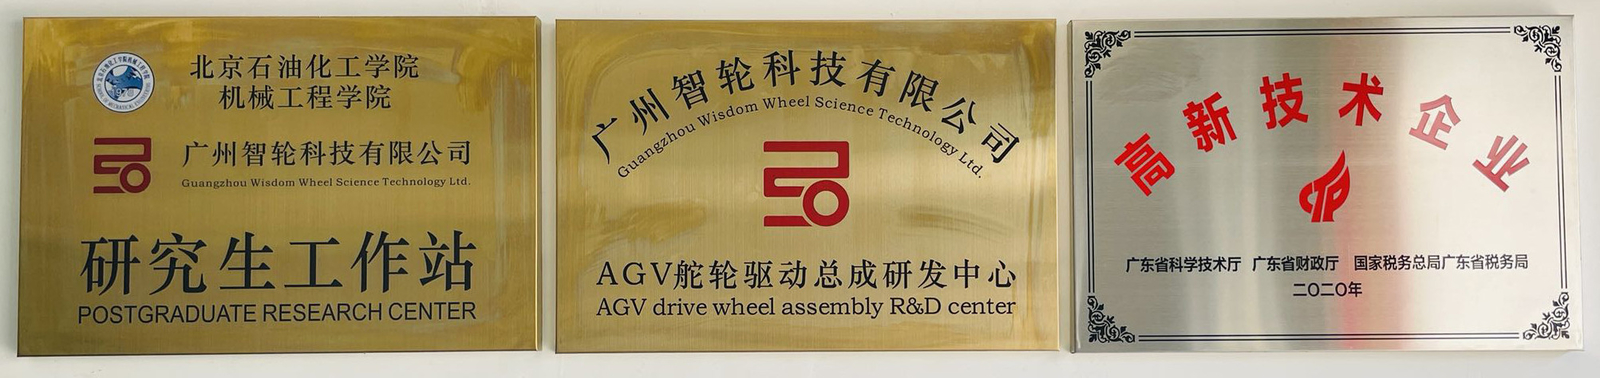 Guangzhou Wisdom Wheel Science Technology Ltd. 공장 생산 라인